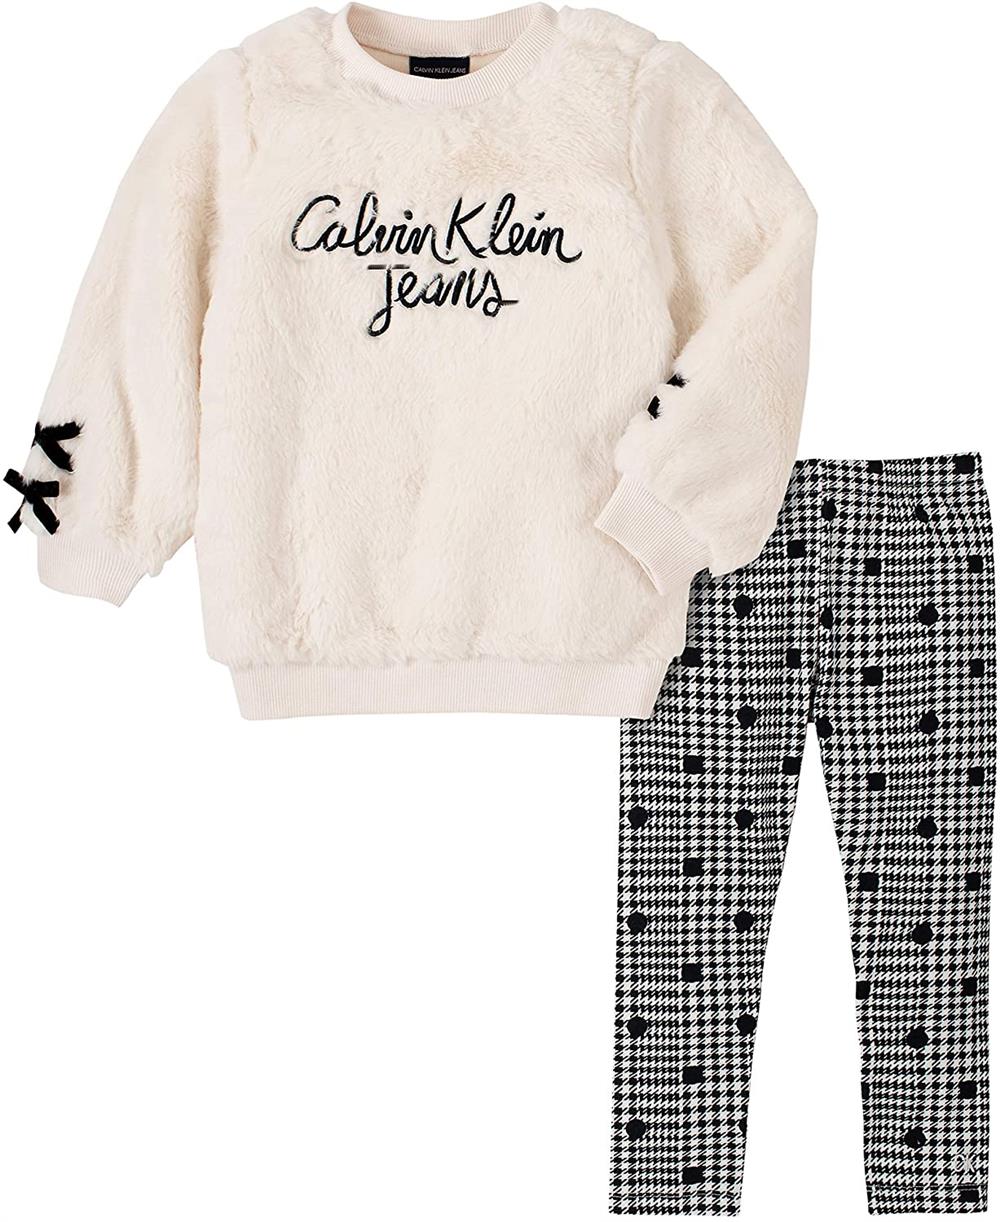 Calvin Klein Girls 2T-4T Fur Tunic Legging Set - 2T / White